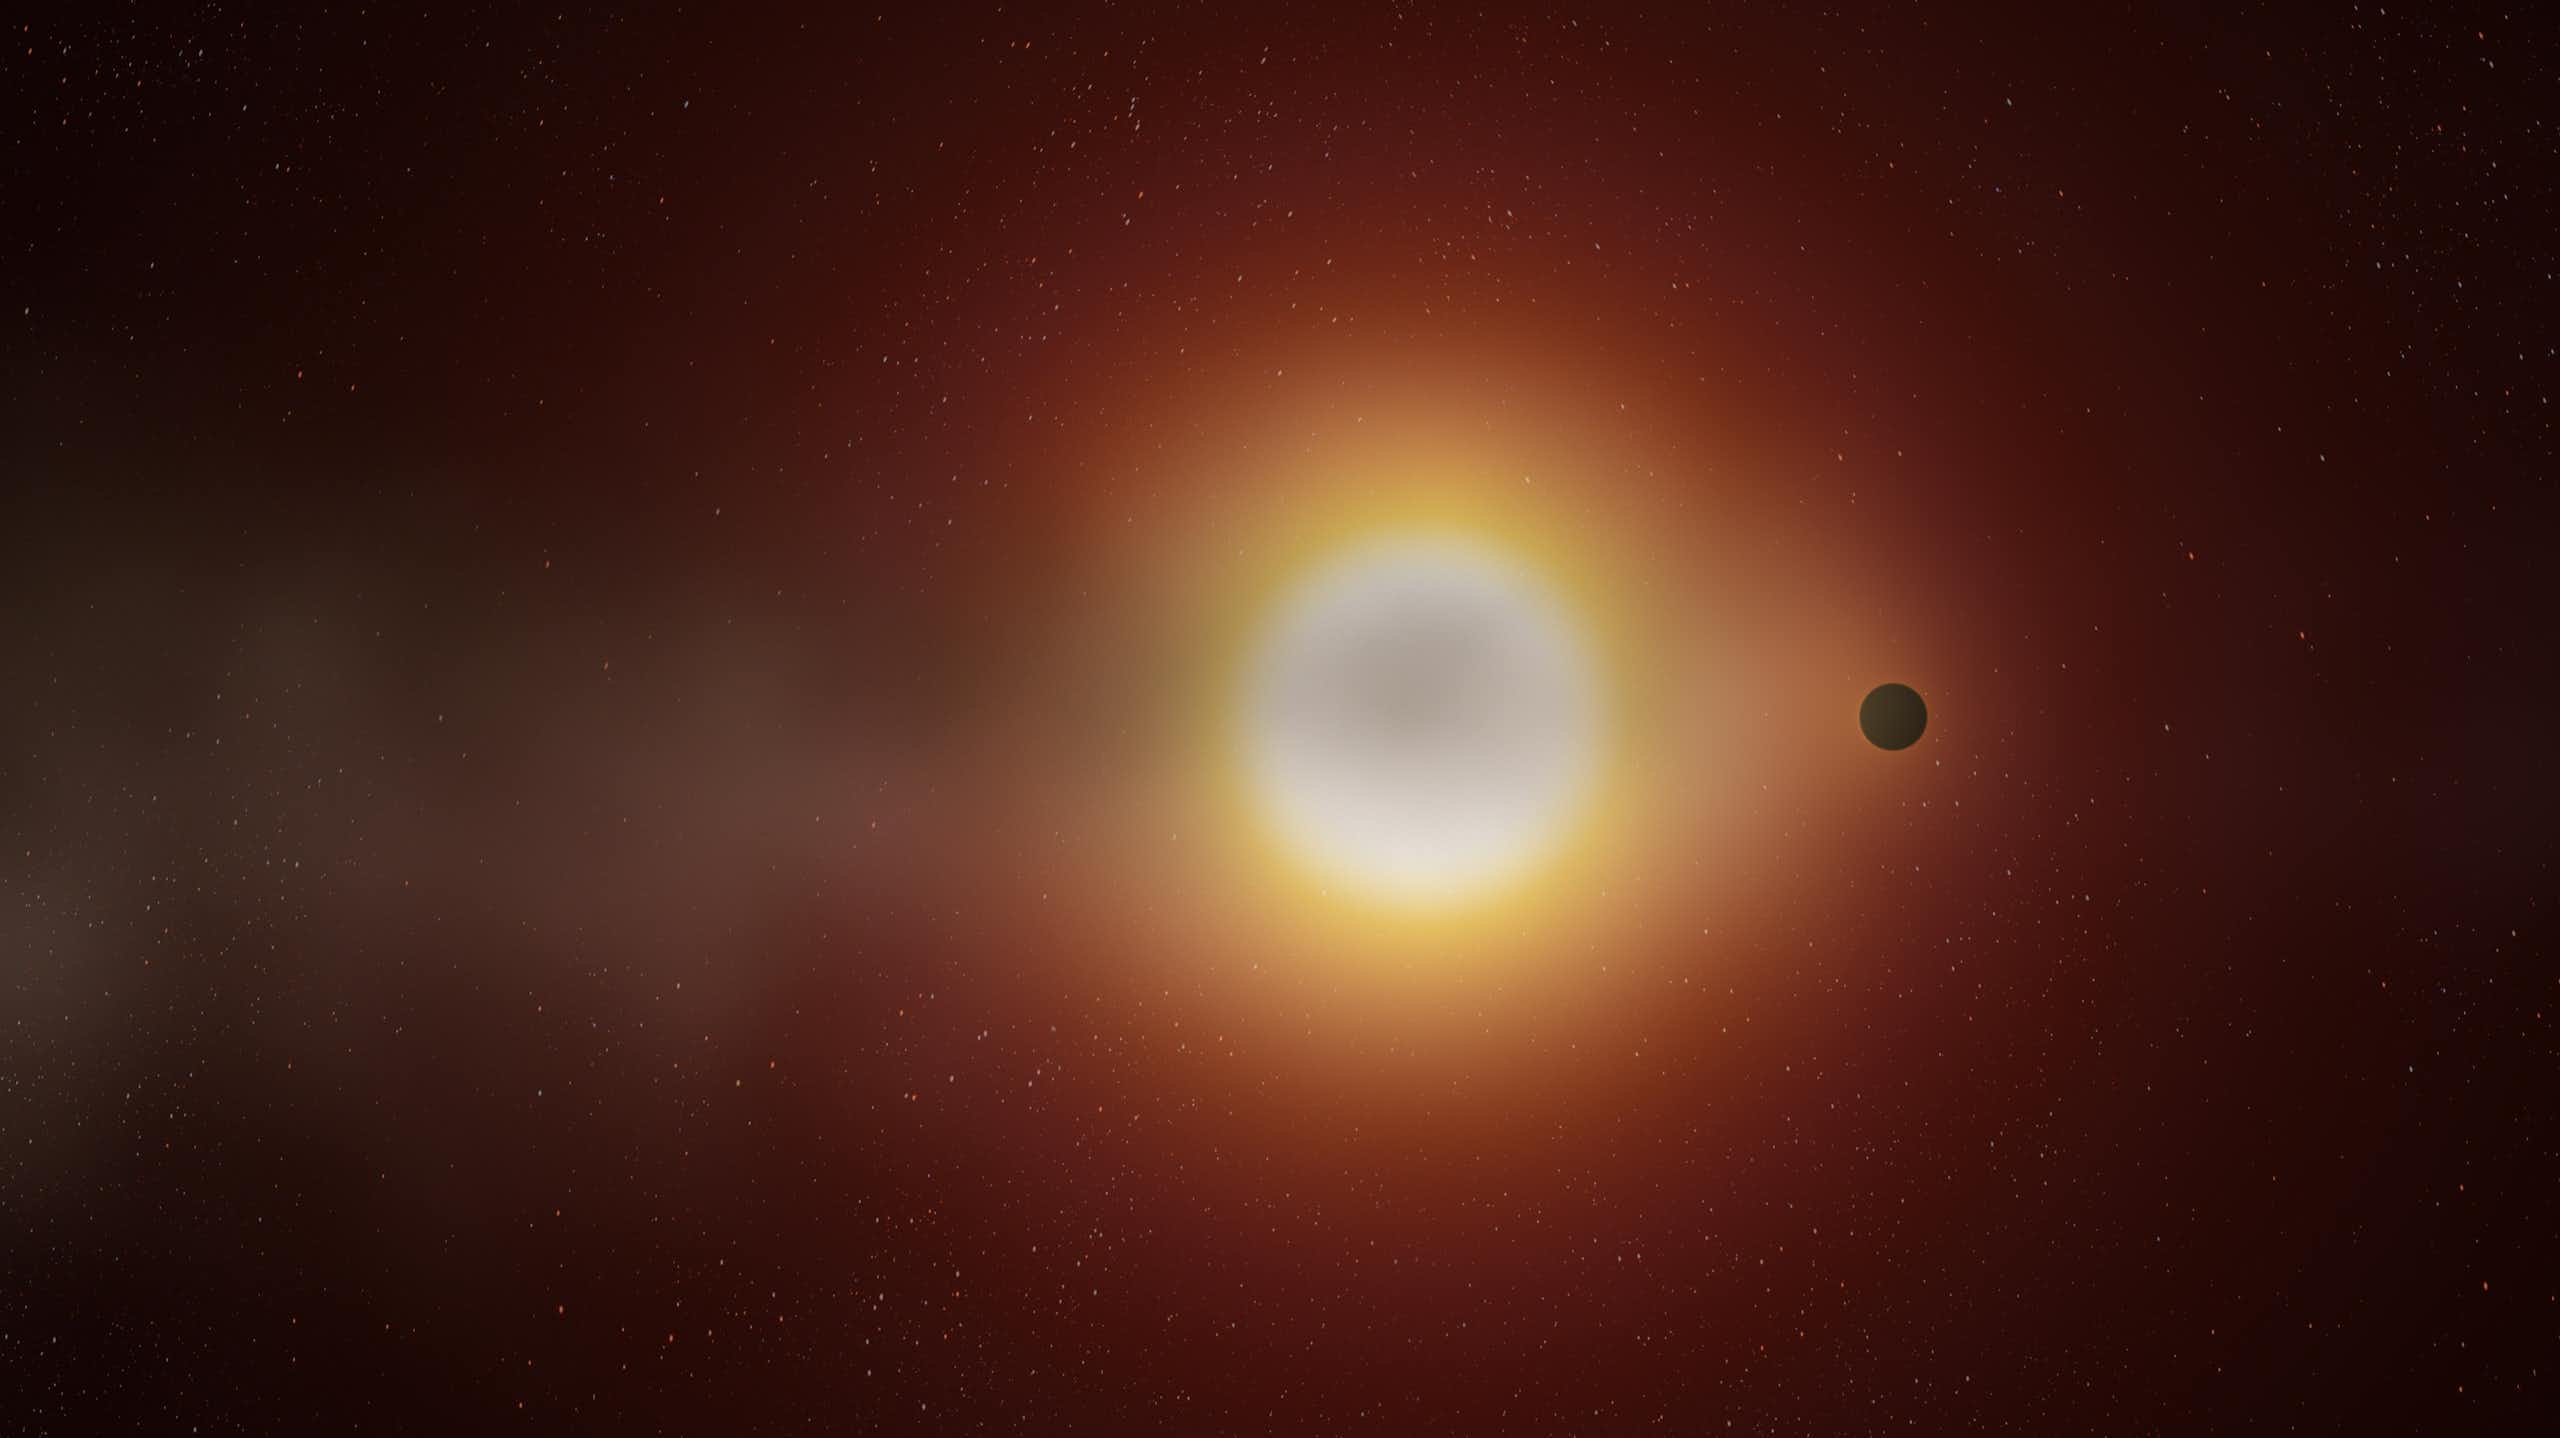 A small planet orbiting around a sun.